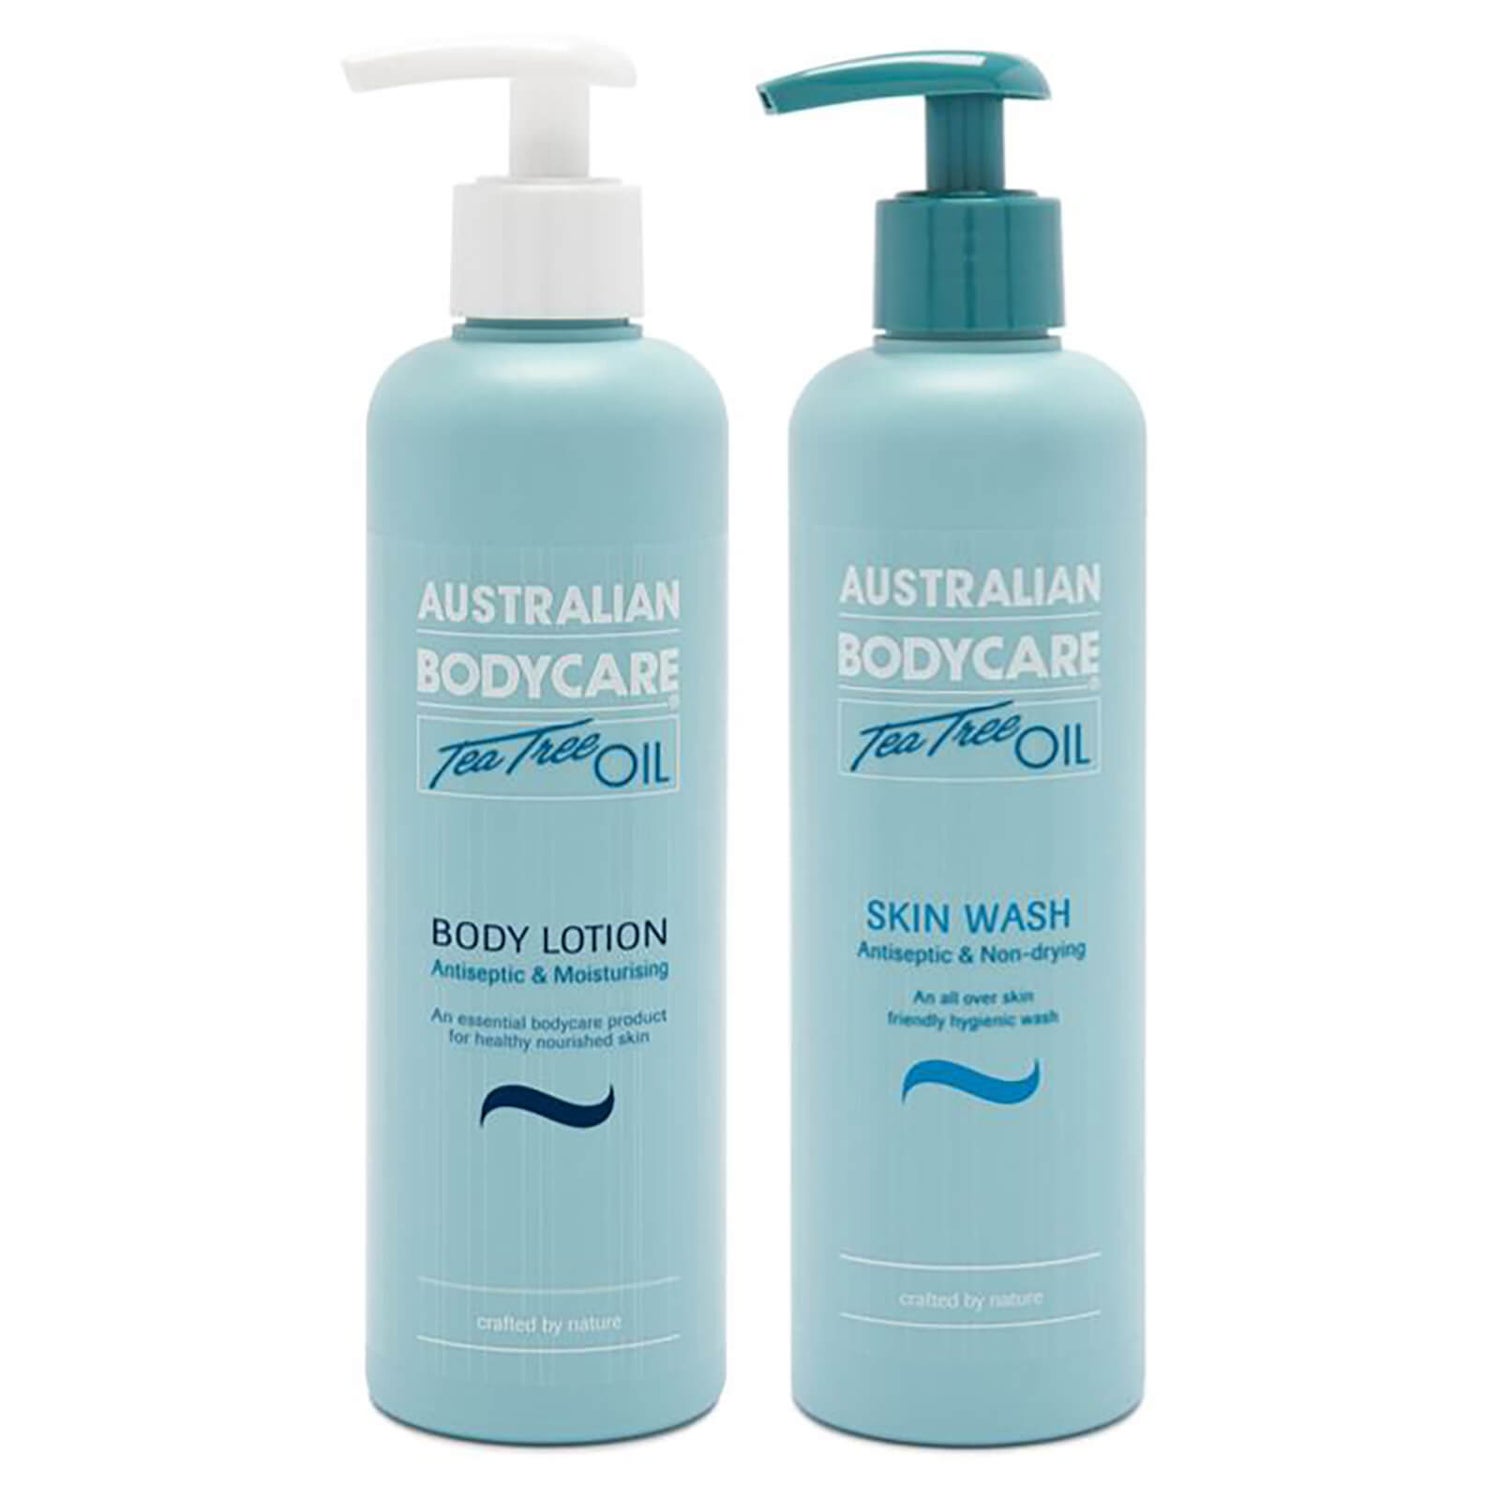 stabil udkast omhyggelig Australian Bodycare Body Lotion 250ml and Bodycare Skin Wash 250ml Bundle |  Buy Online | Mankind